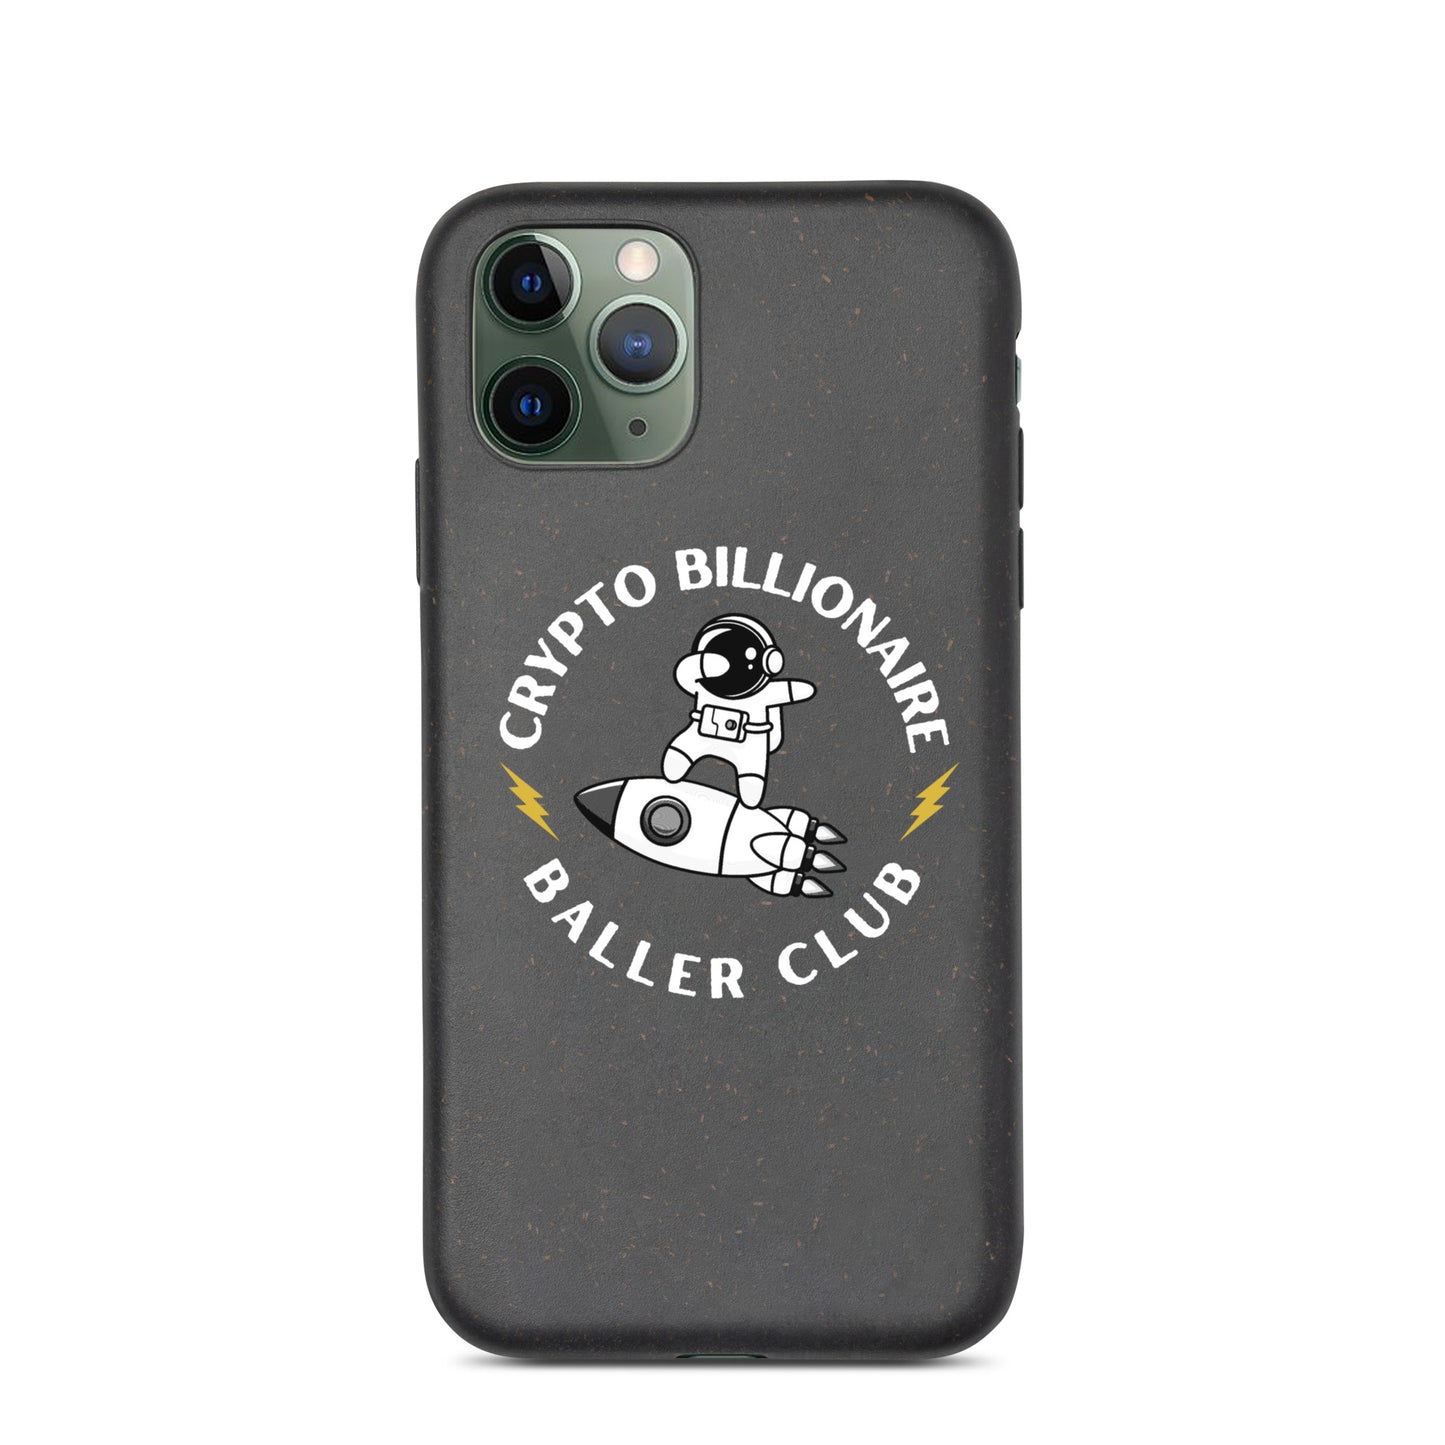 Crypto Billioinaire Baller Club - iPhone case